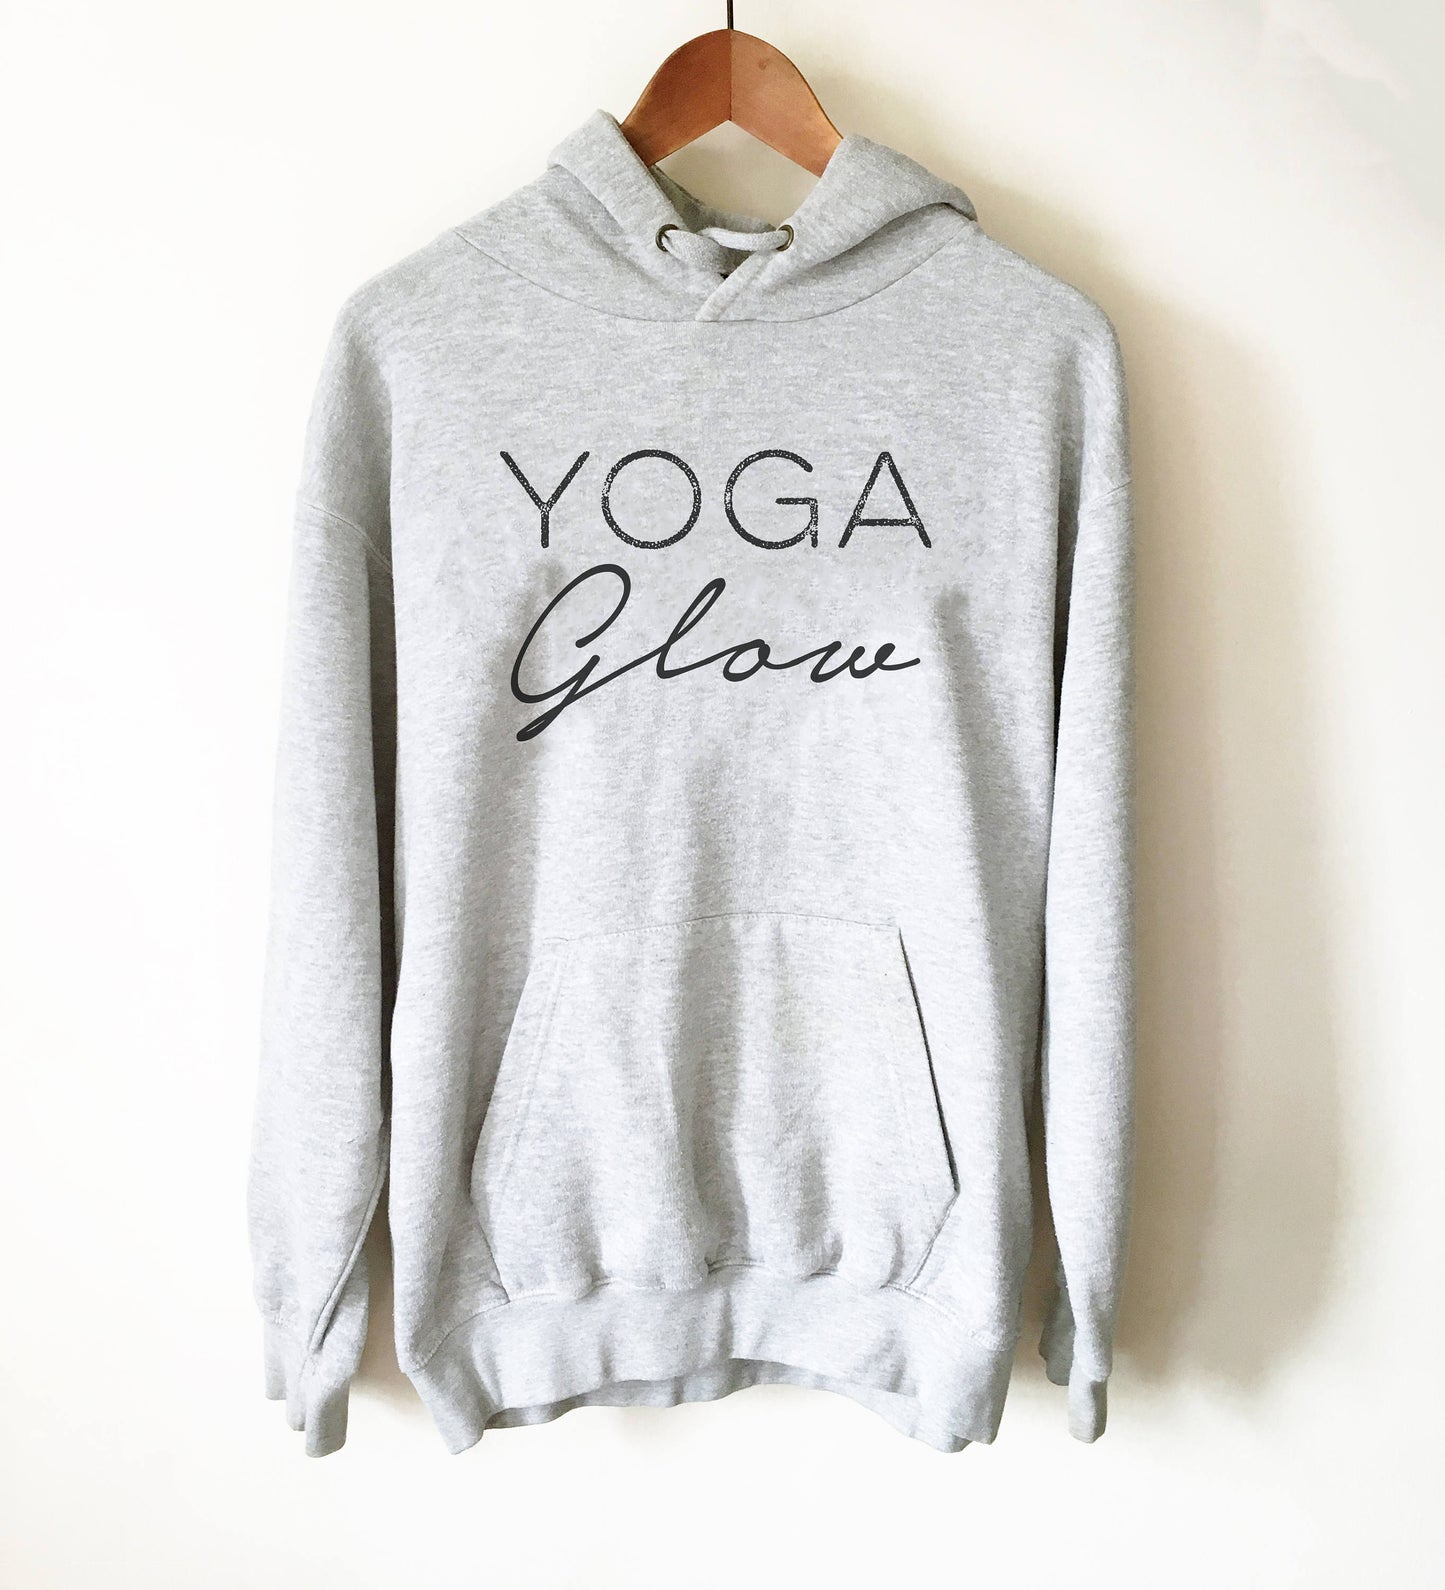 Yoga Glow Hoodie - Yoga Shirt, Zen Yoga Clothing, Yoga Workout Clothes, Yoga Wear, Yoga Clothes, Yoga T Shirts Funny